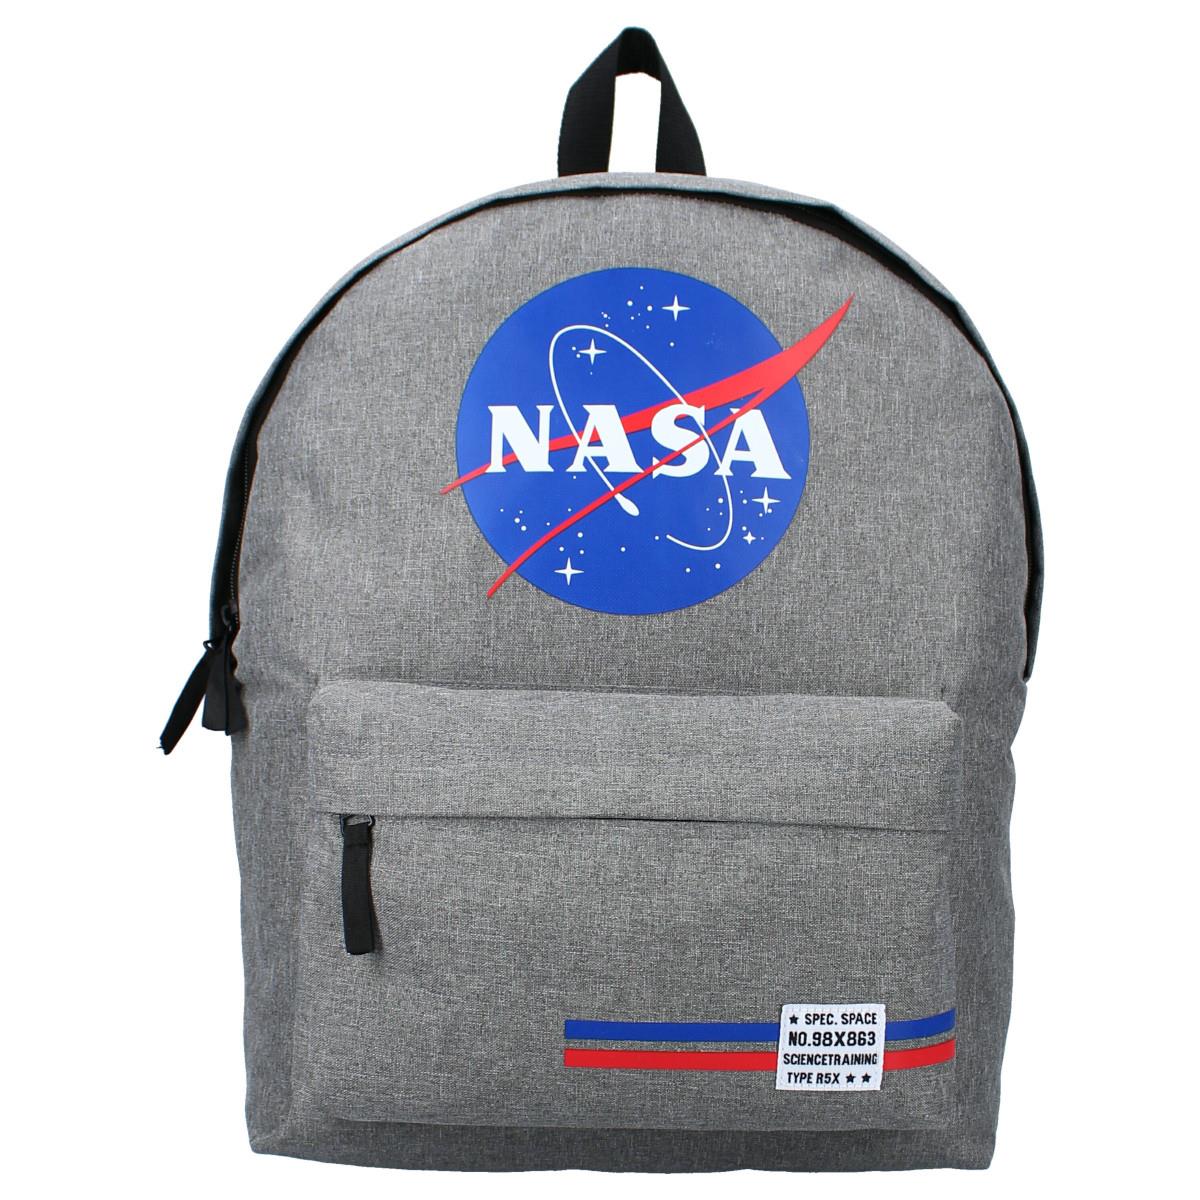 Rucksack NASA grau Sportrucksack Schulranzen Schulrucksack